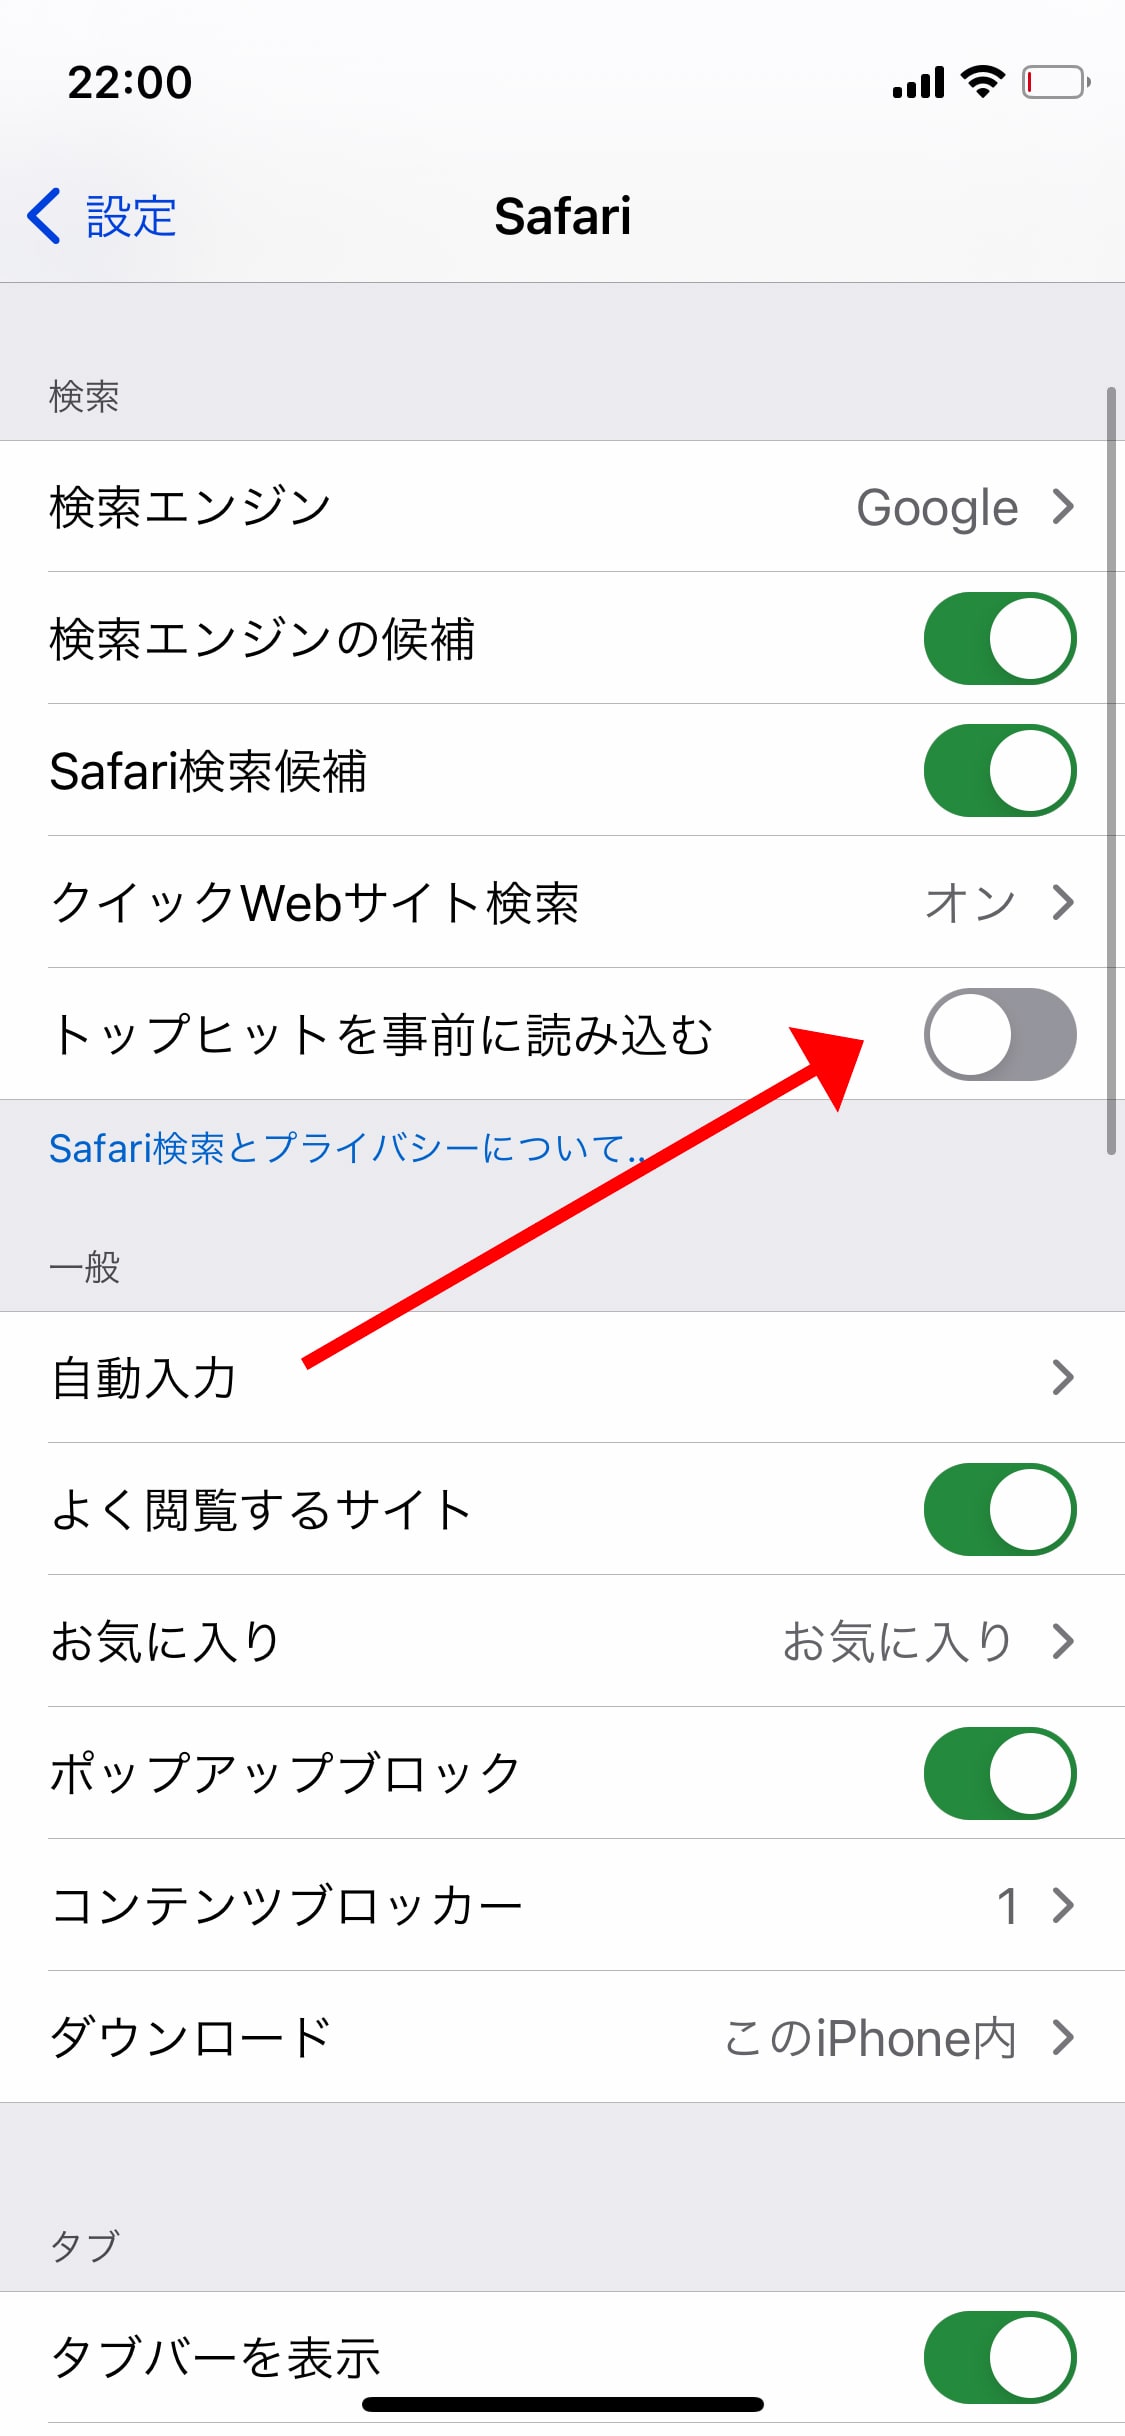 Safariの「トップヒットを事前に読み込む」をオフにしてiPhoneパケット通信を節約する方法